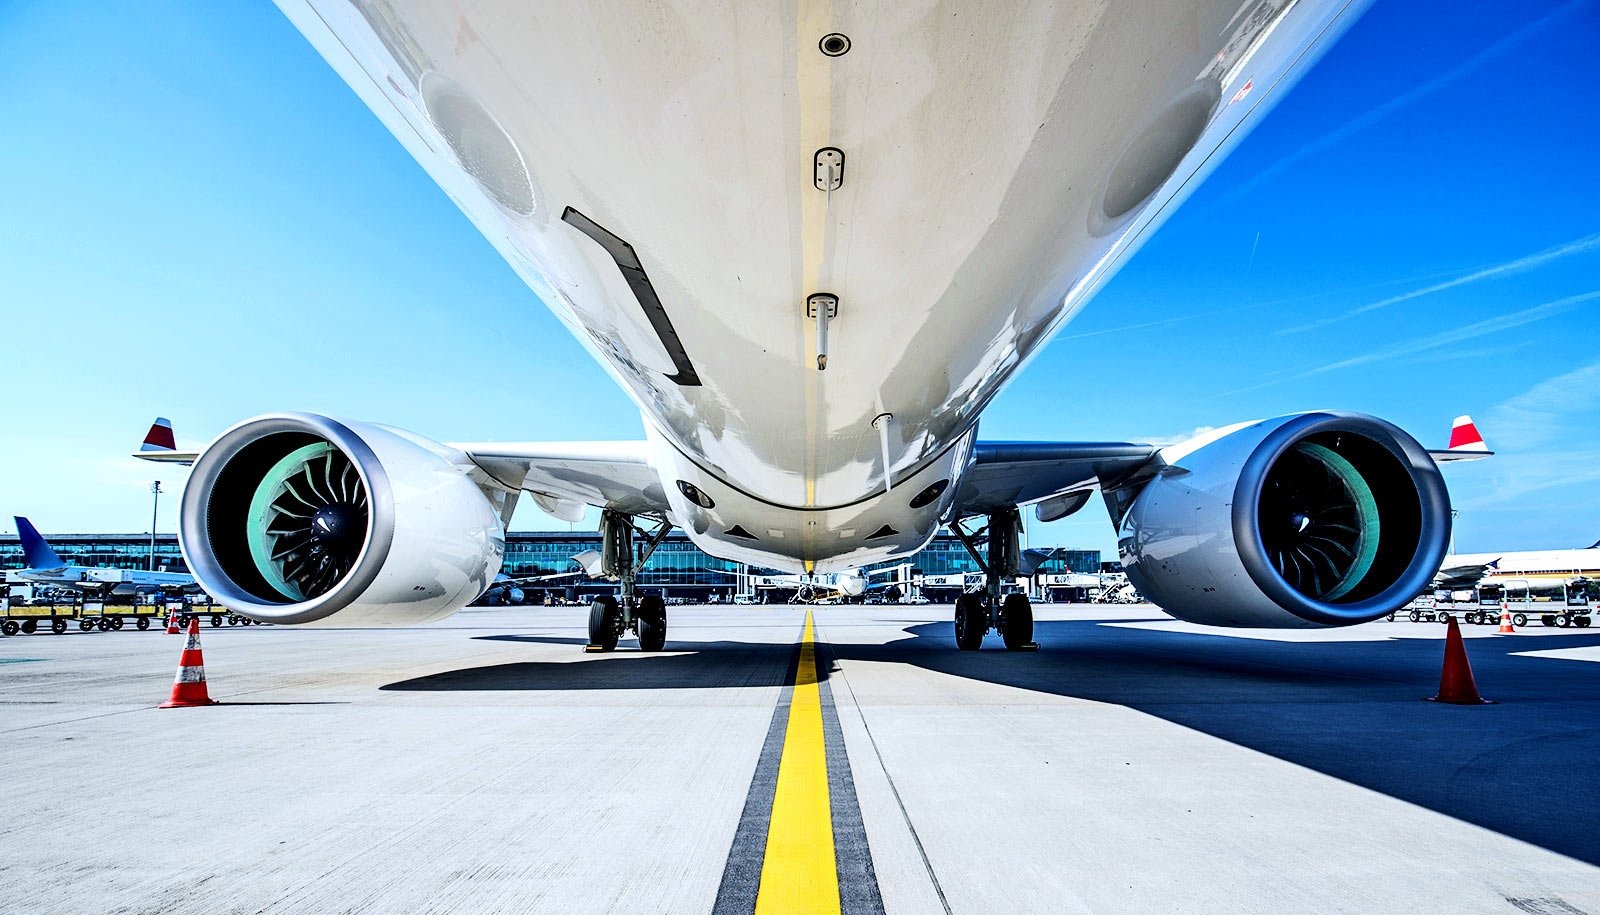 More information about "Αύξηση 10,7% στην αεροπορική κίνηση των αεροδρομίων το πρώτο δίμηνο του 2019"